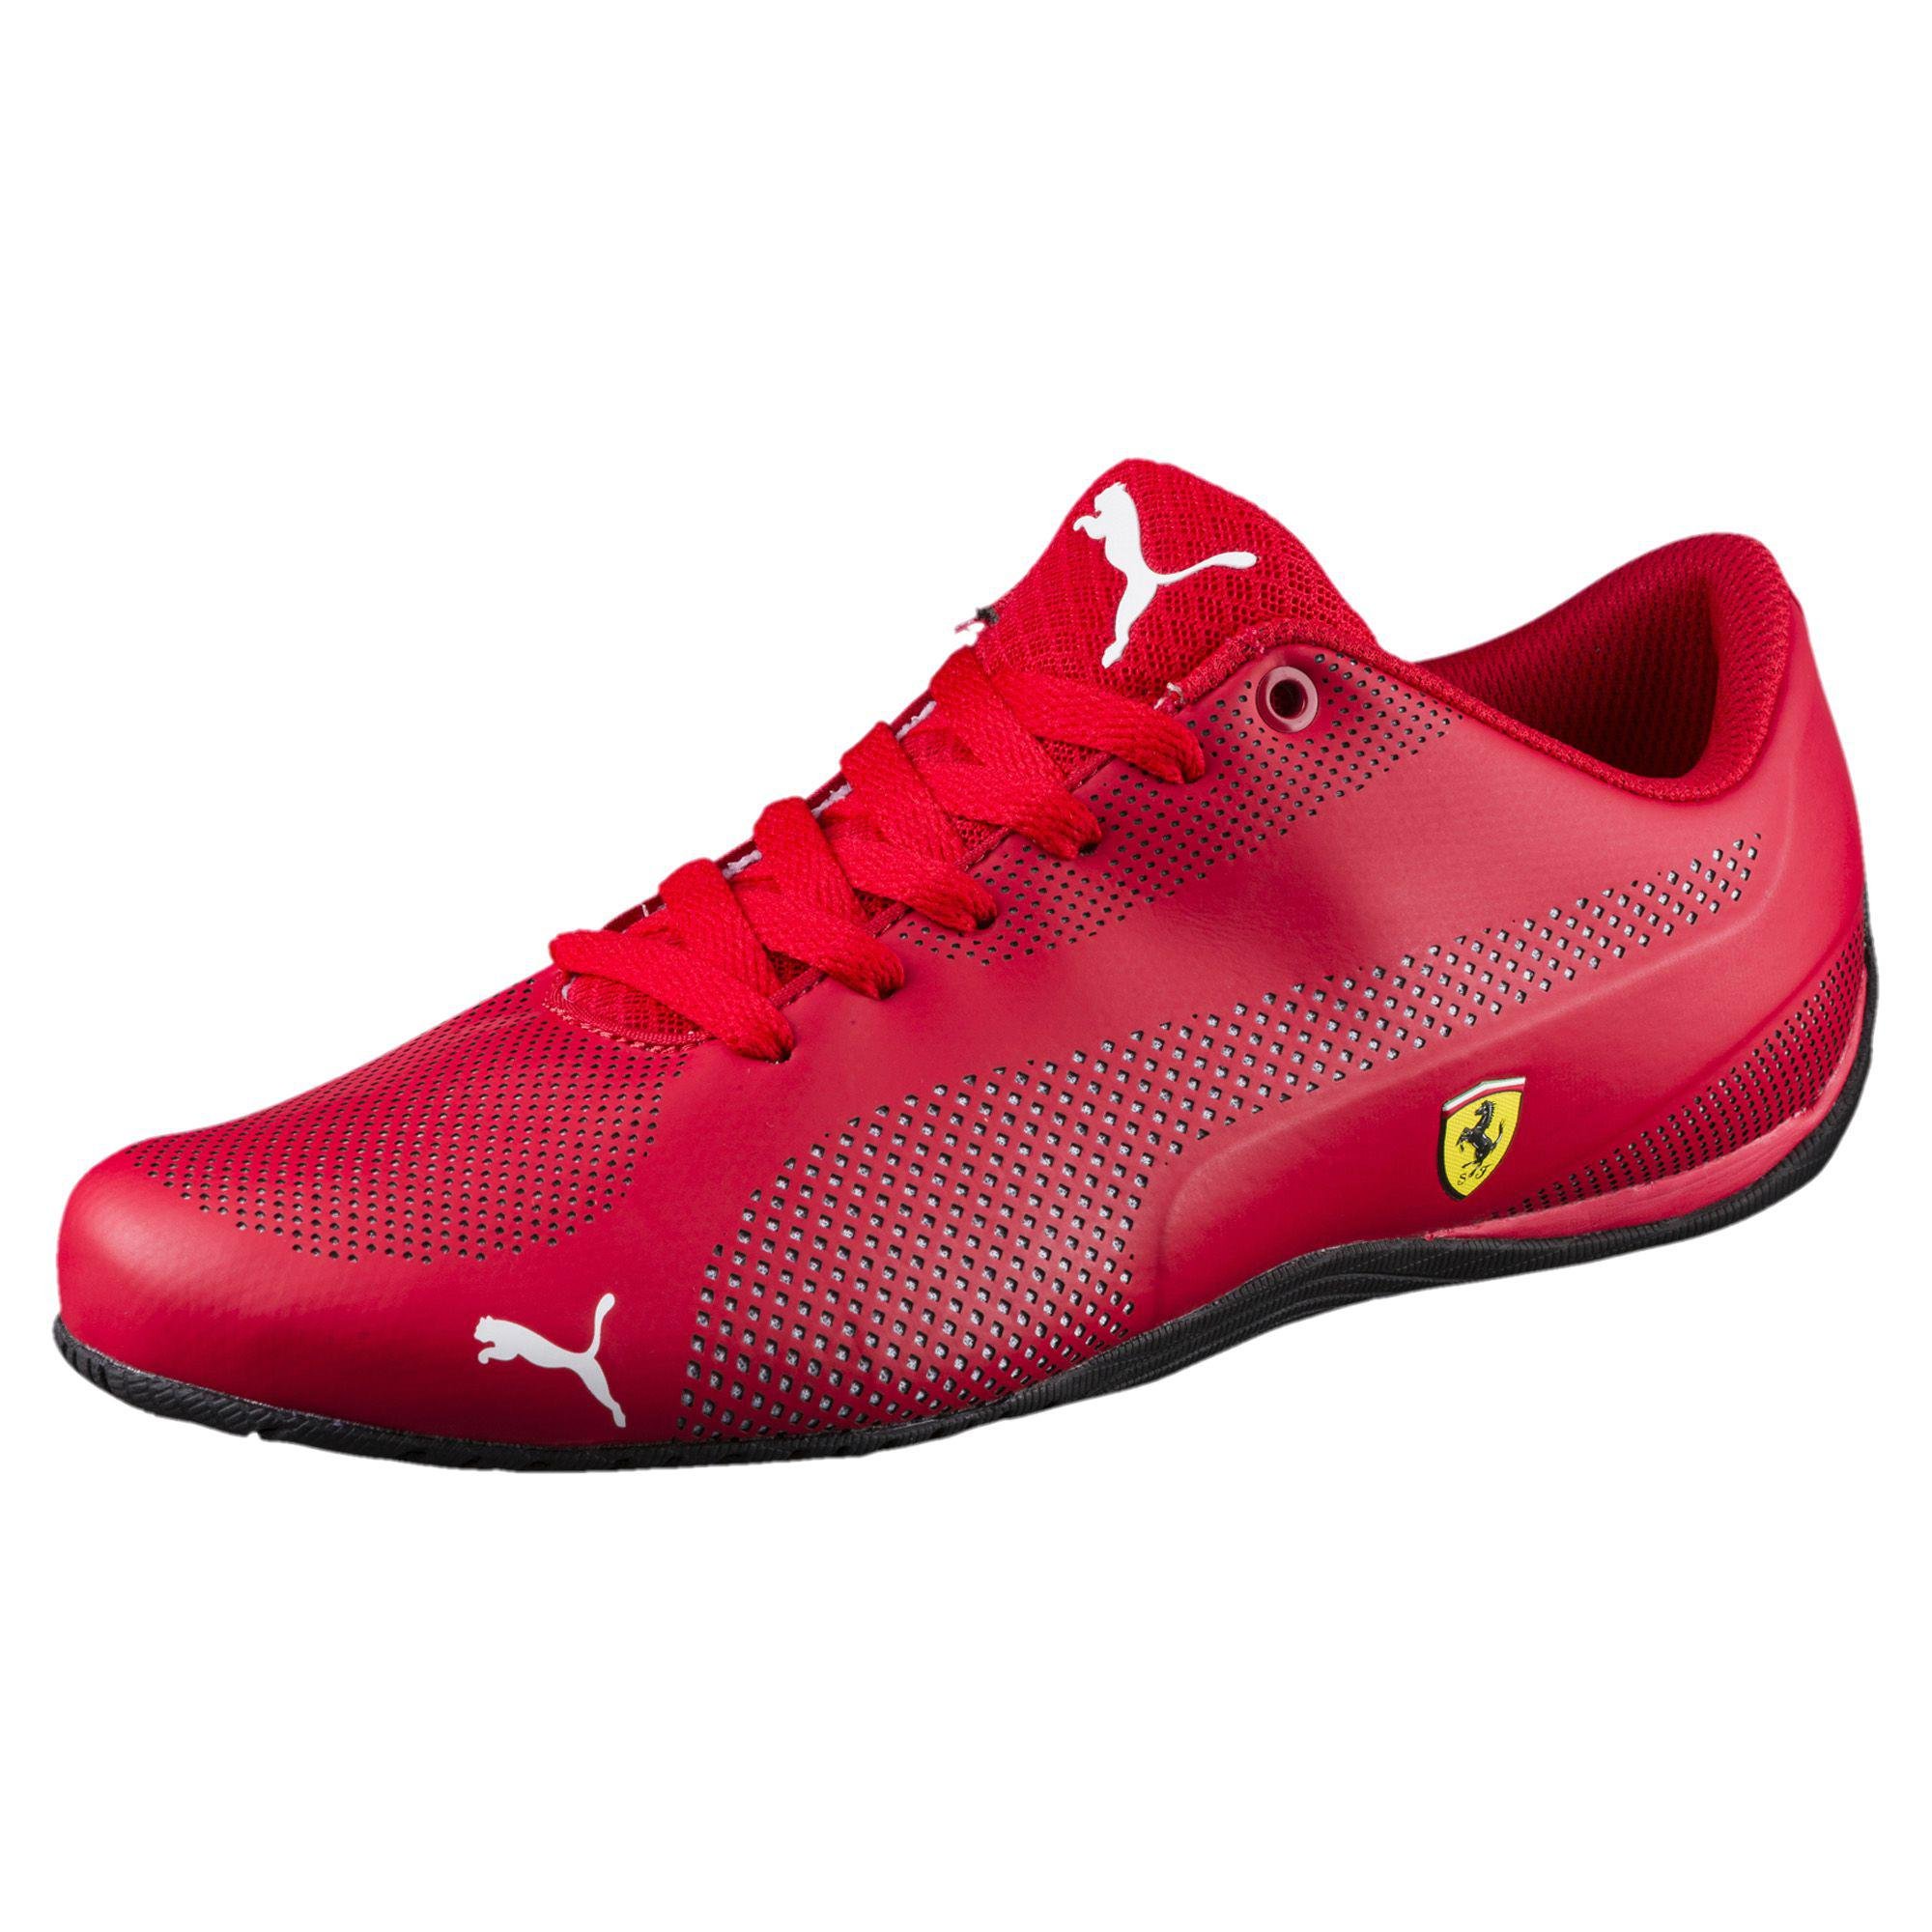 Lyst - Puma Ferrari Drift Cat 5 Ultra Men's Shoes in Red for Men